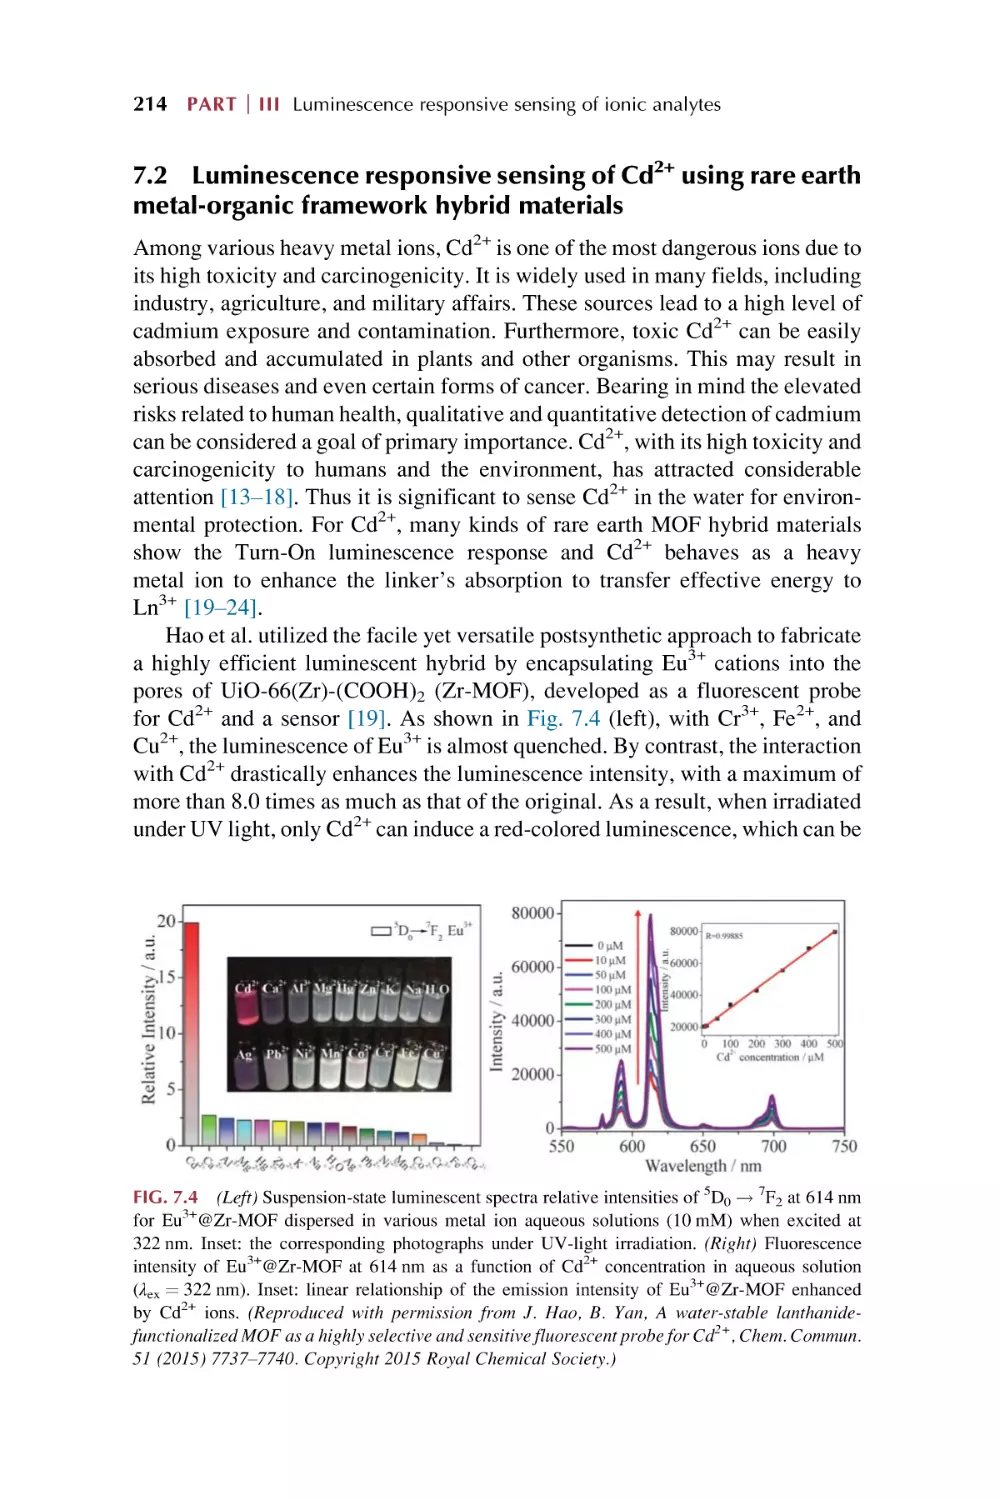 7.2. Luminescence responsive sensing of Cd2+ using rare earth metal-organic framework hybrid materials